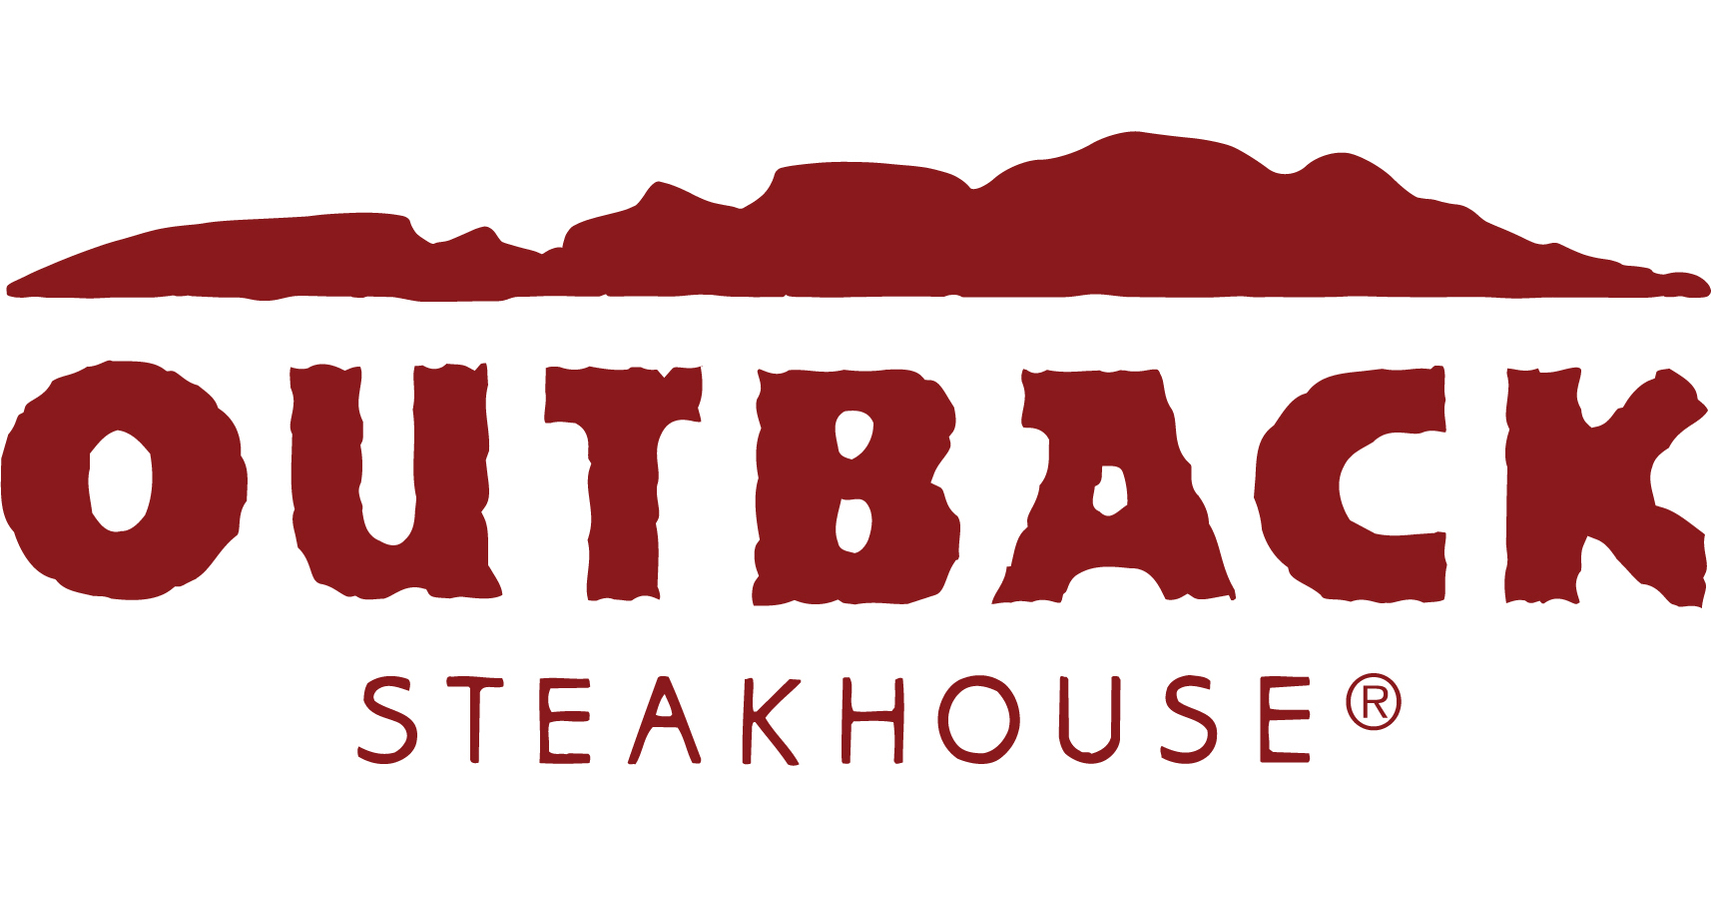 https://mma.prnewswire.com/media/623731/Outback_Steakhouse_Logo.jpg?p=facebook